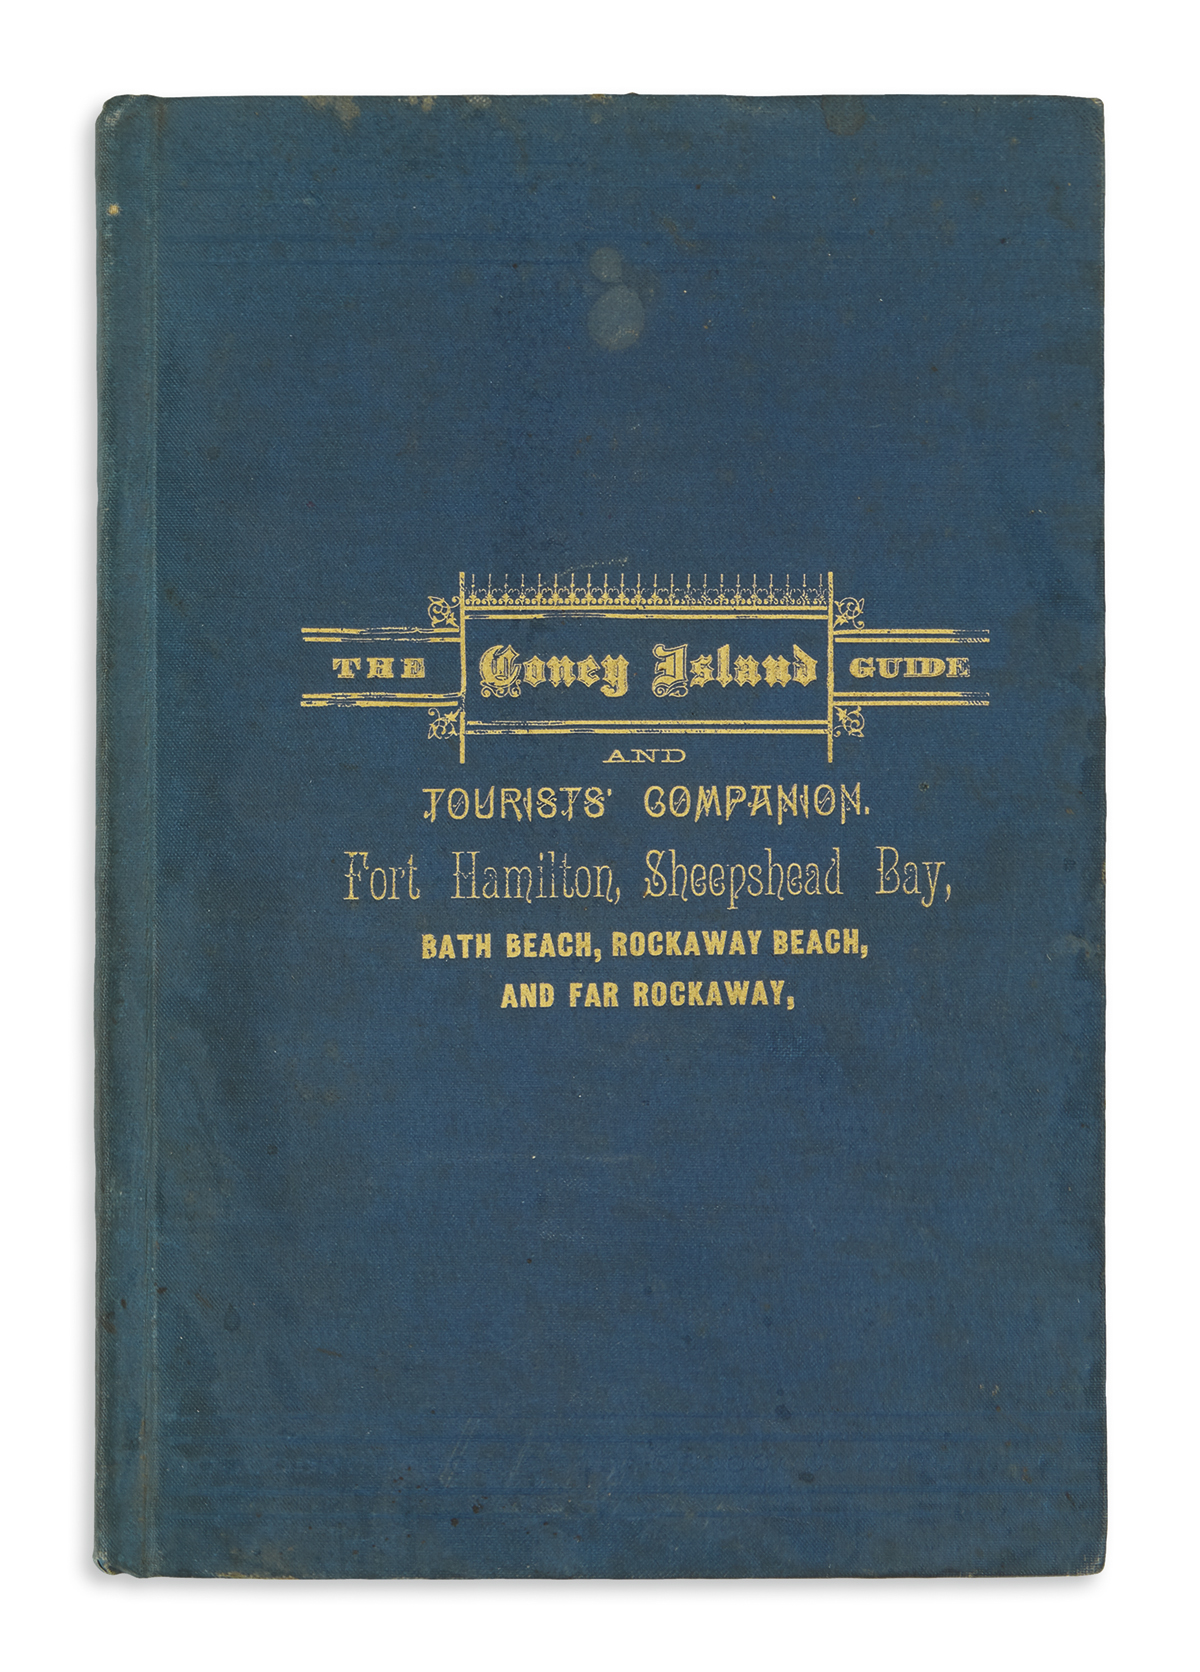 (NEW YORK CITY.) Tracy, J. Perkins. The Tourists Companion and Guide to Coney Island, Fort Hamilton, Bath Beach,